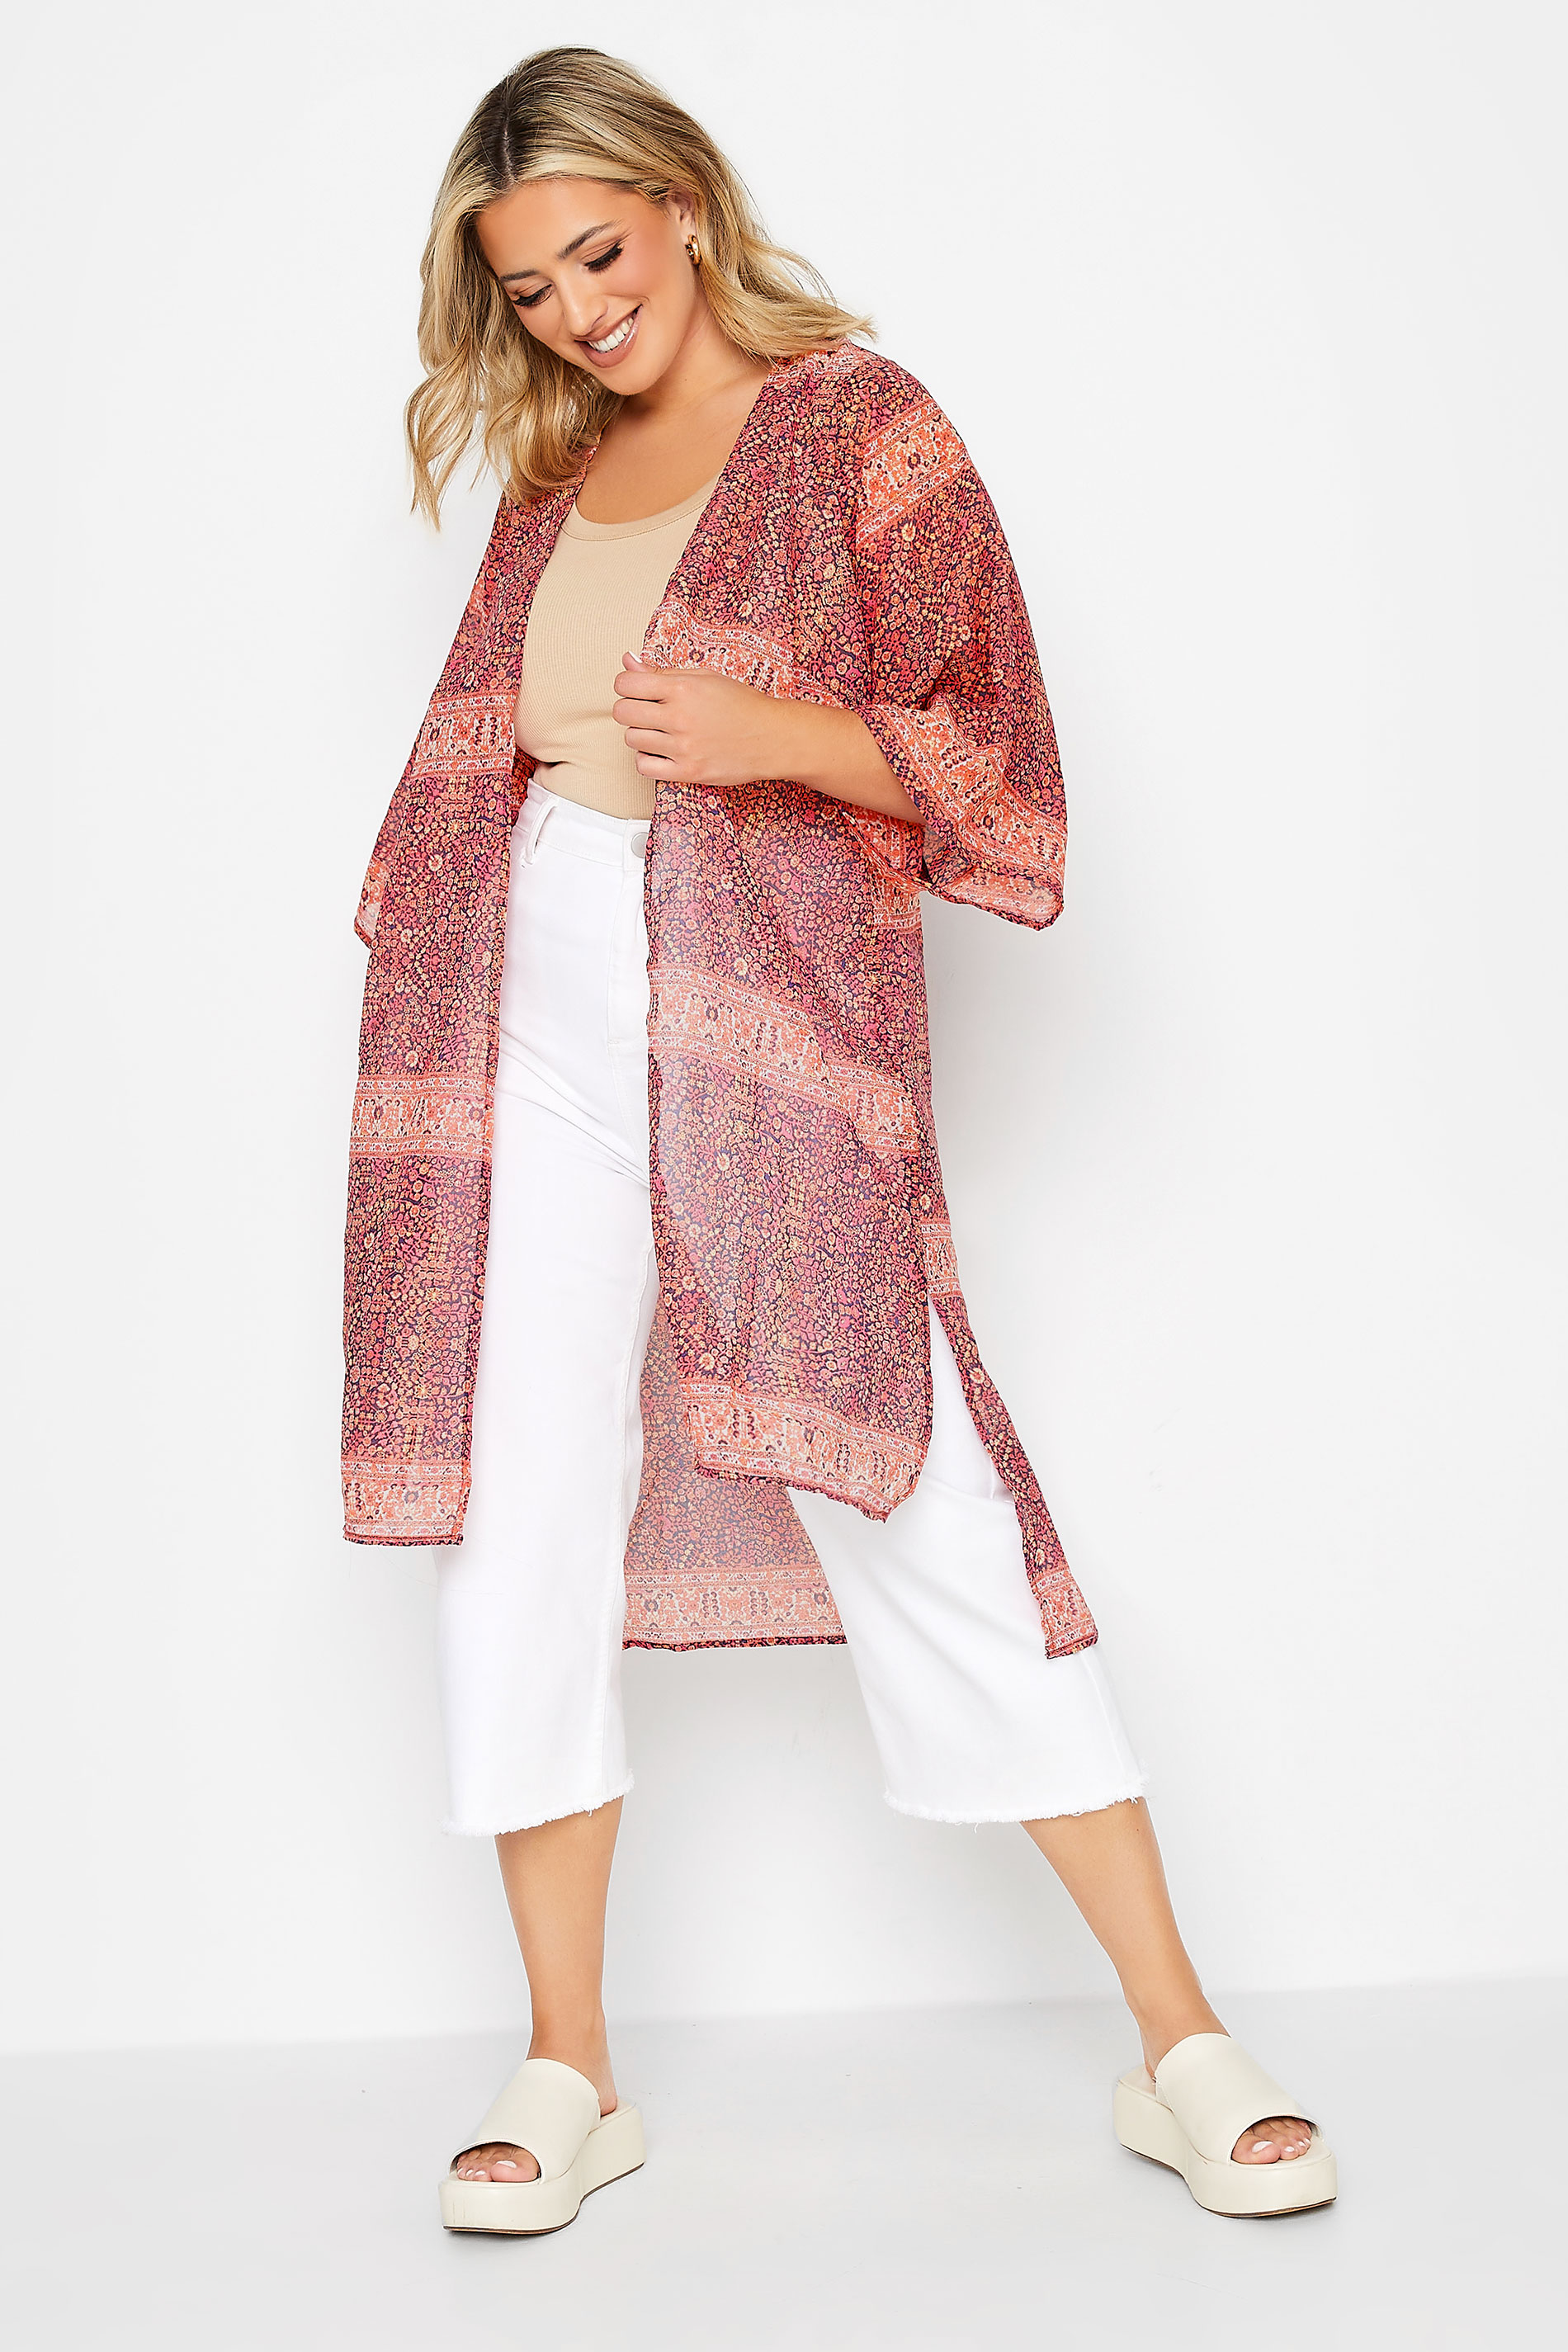 YOURS Plus Size Orange Mixed Floral Print Kimono | Yours Clothing 2